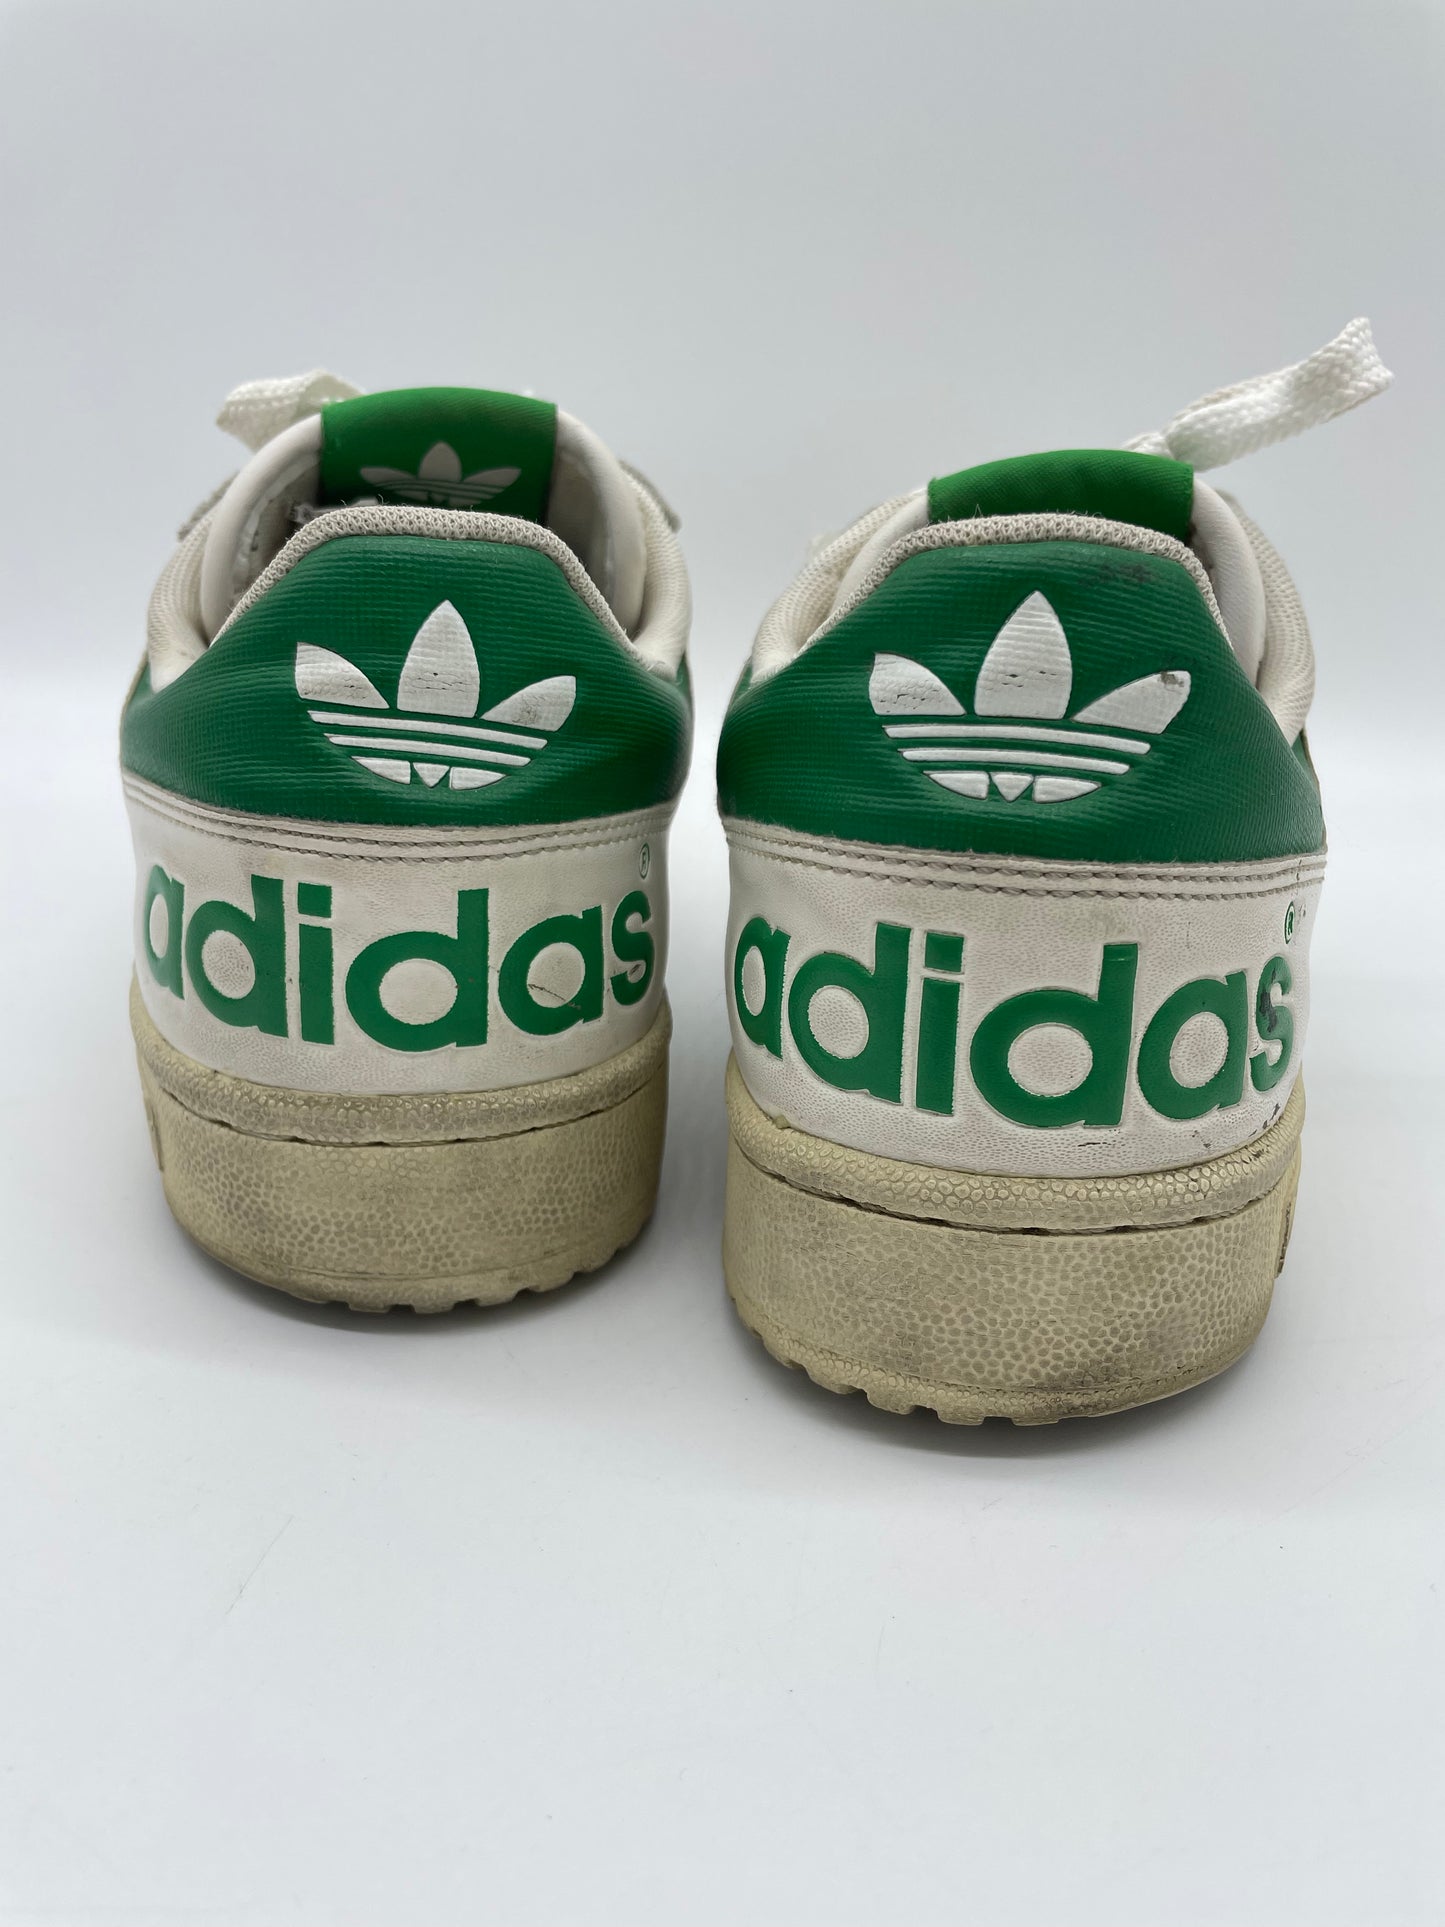 Adidas-Turnschuhe aus den 1990ern